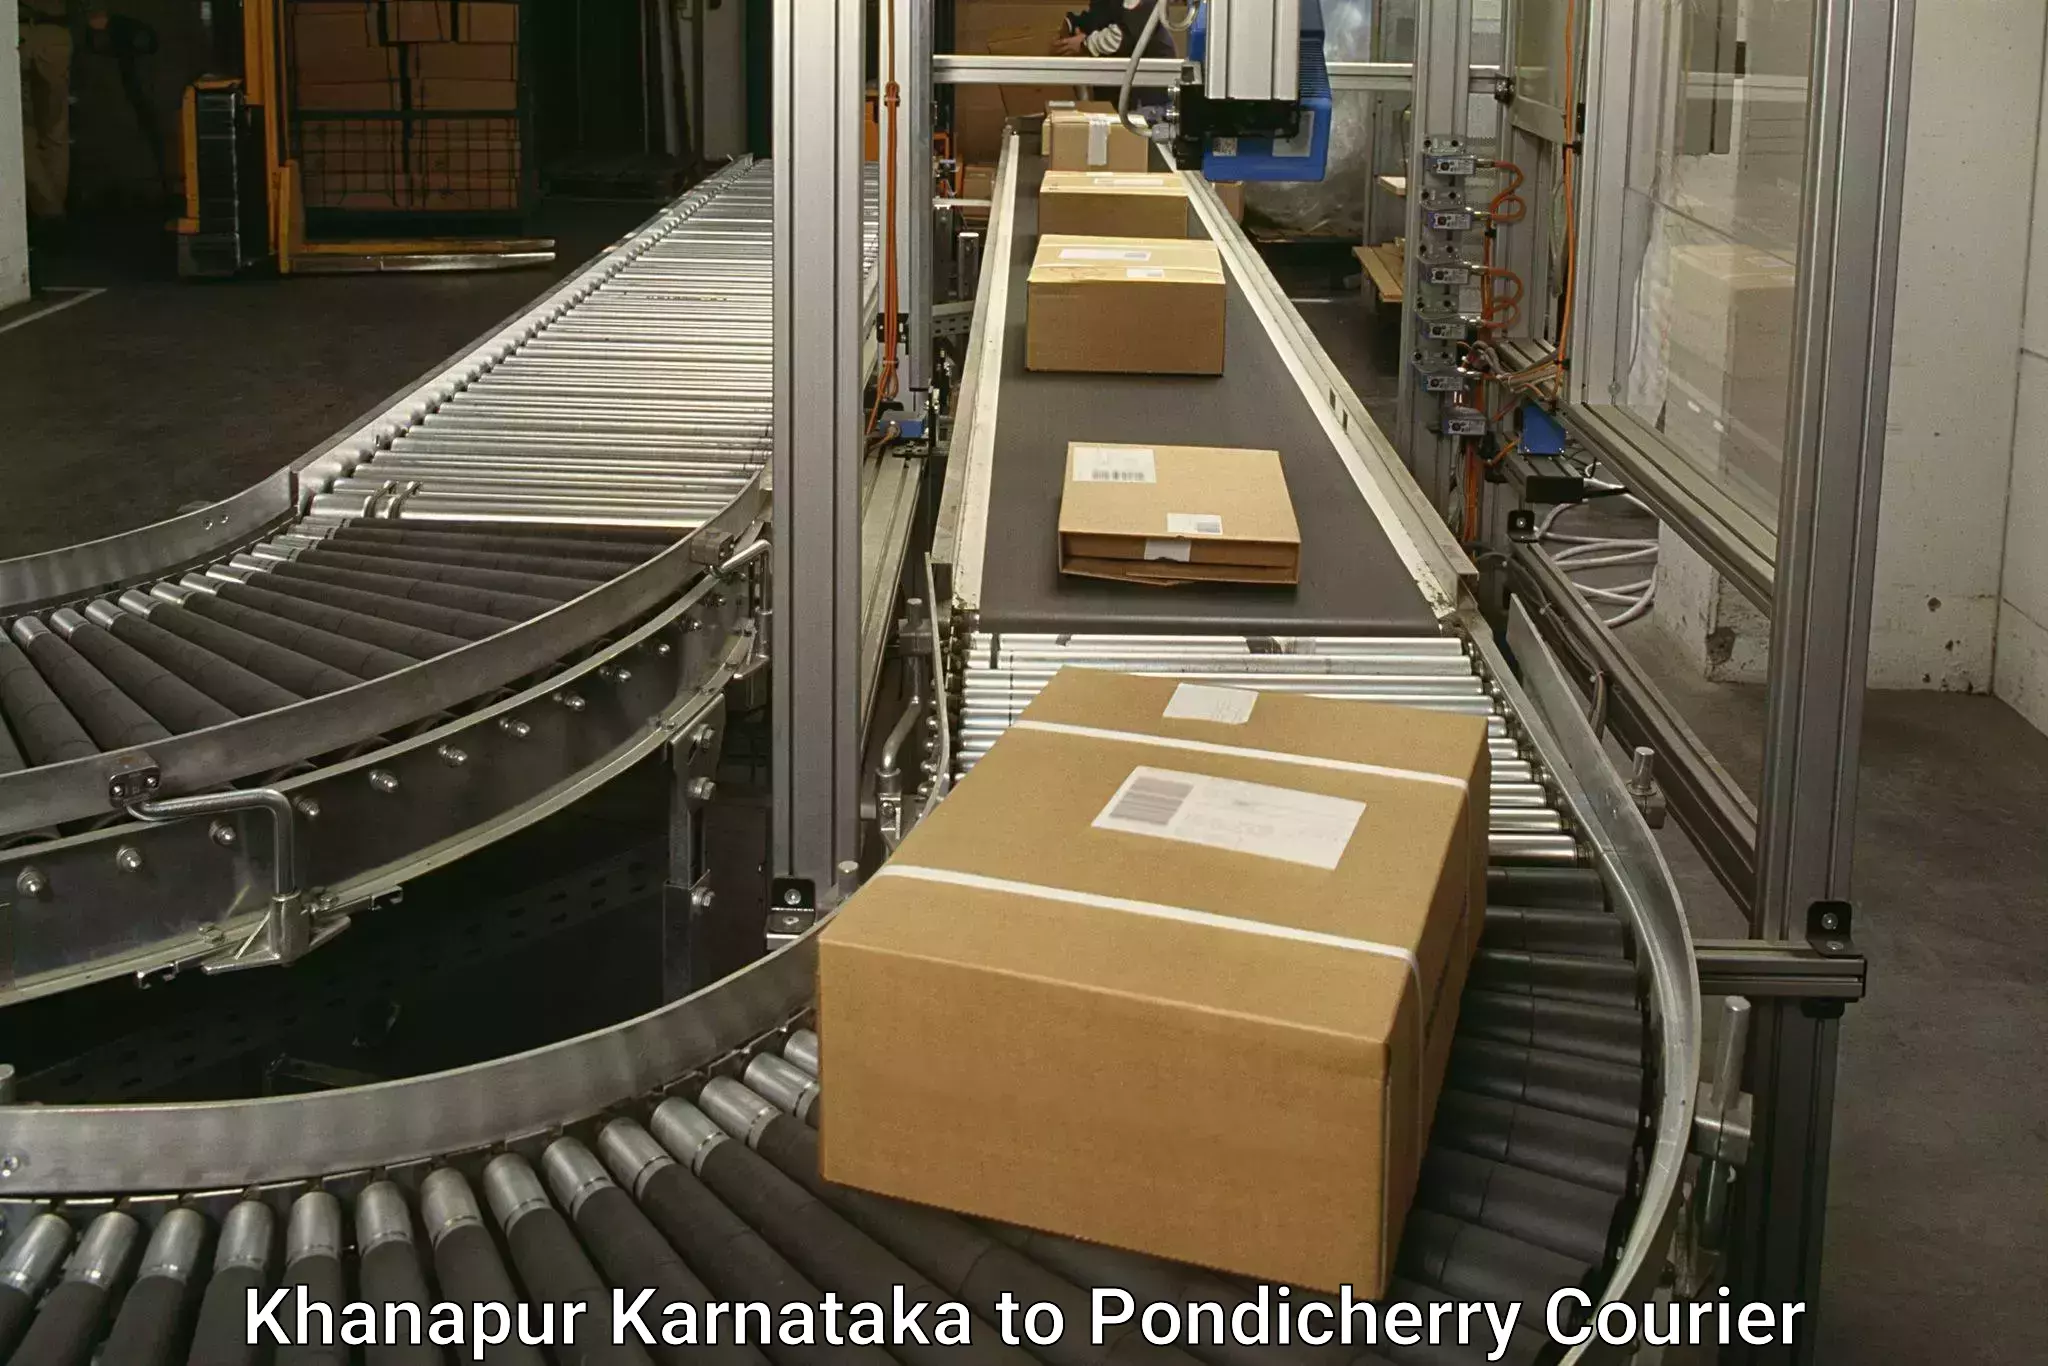 International parcel service Khanapur Karnataka to Pondicherry